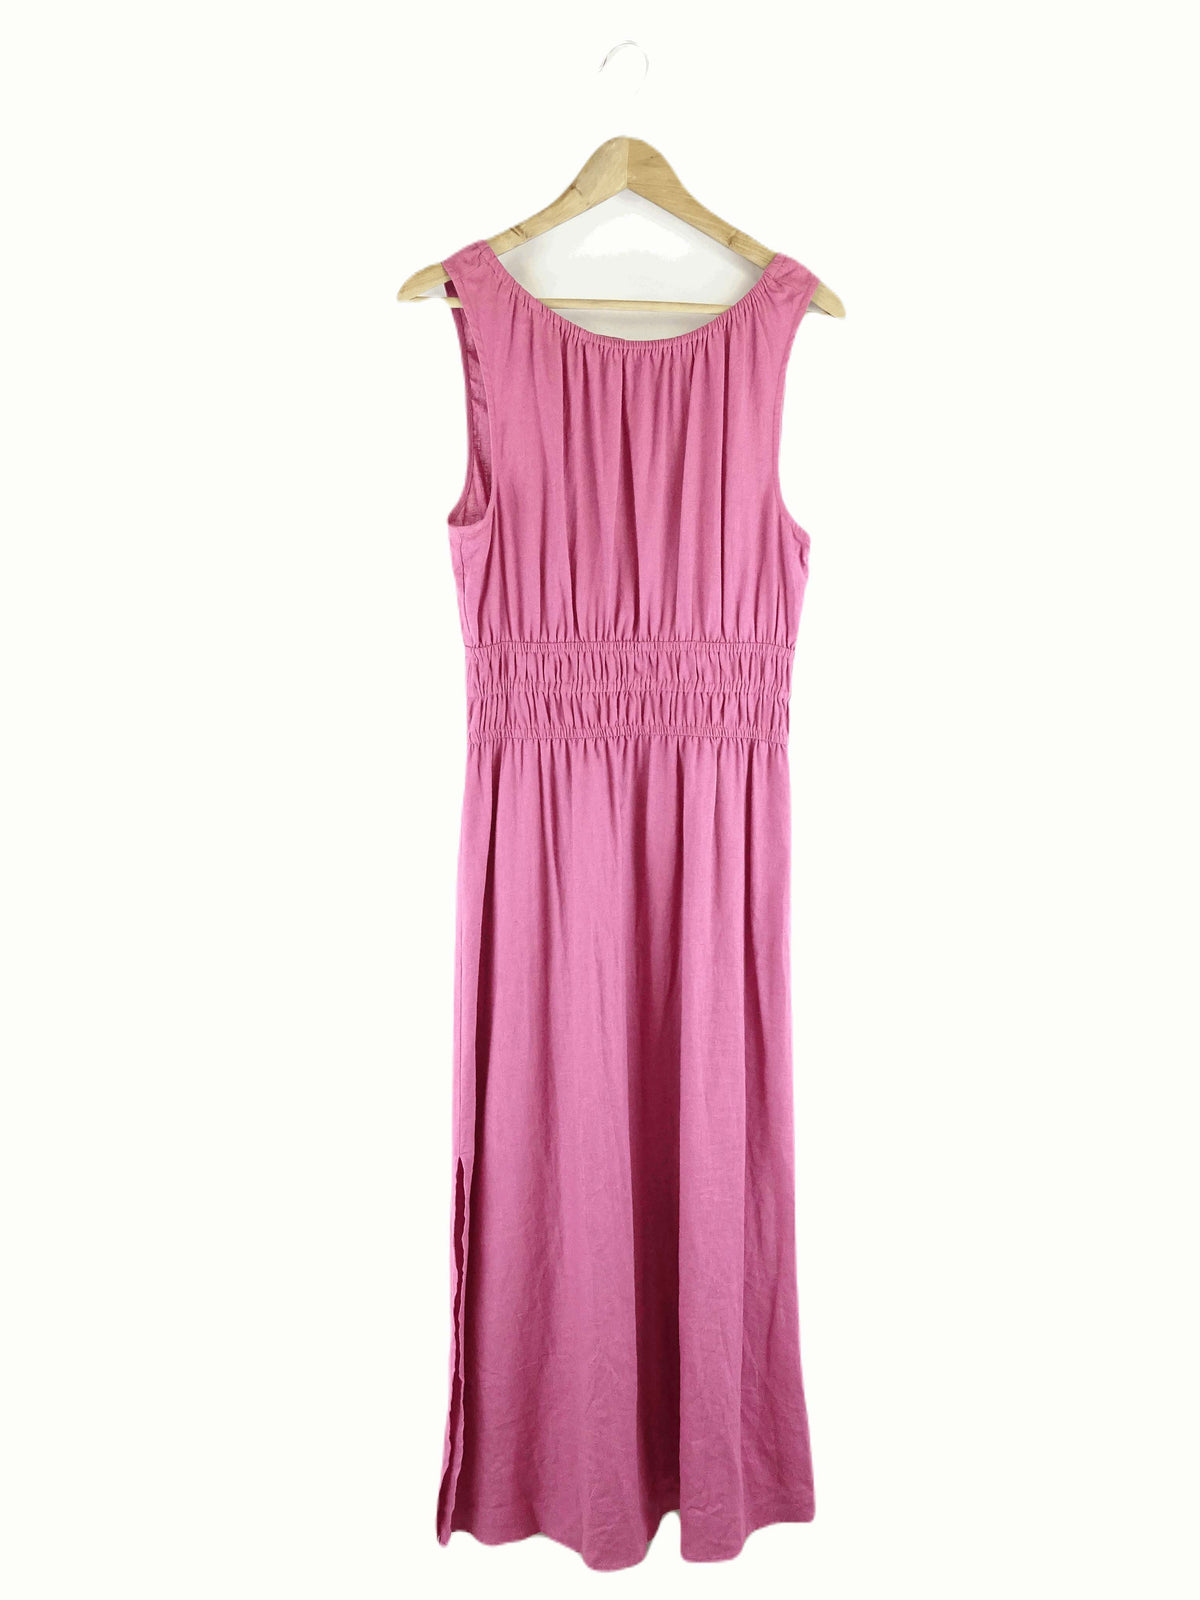 Boutique Pink Linen Dress 8